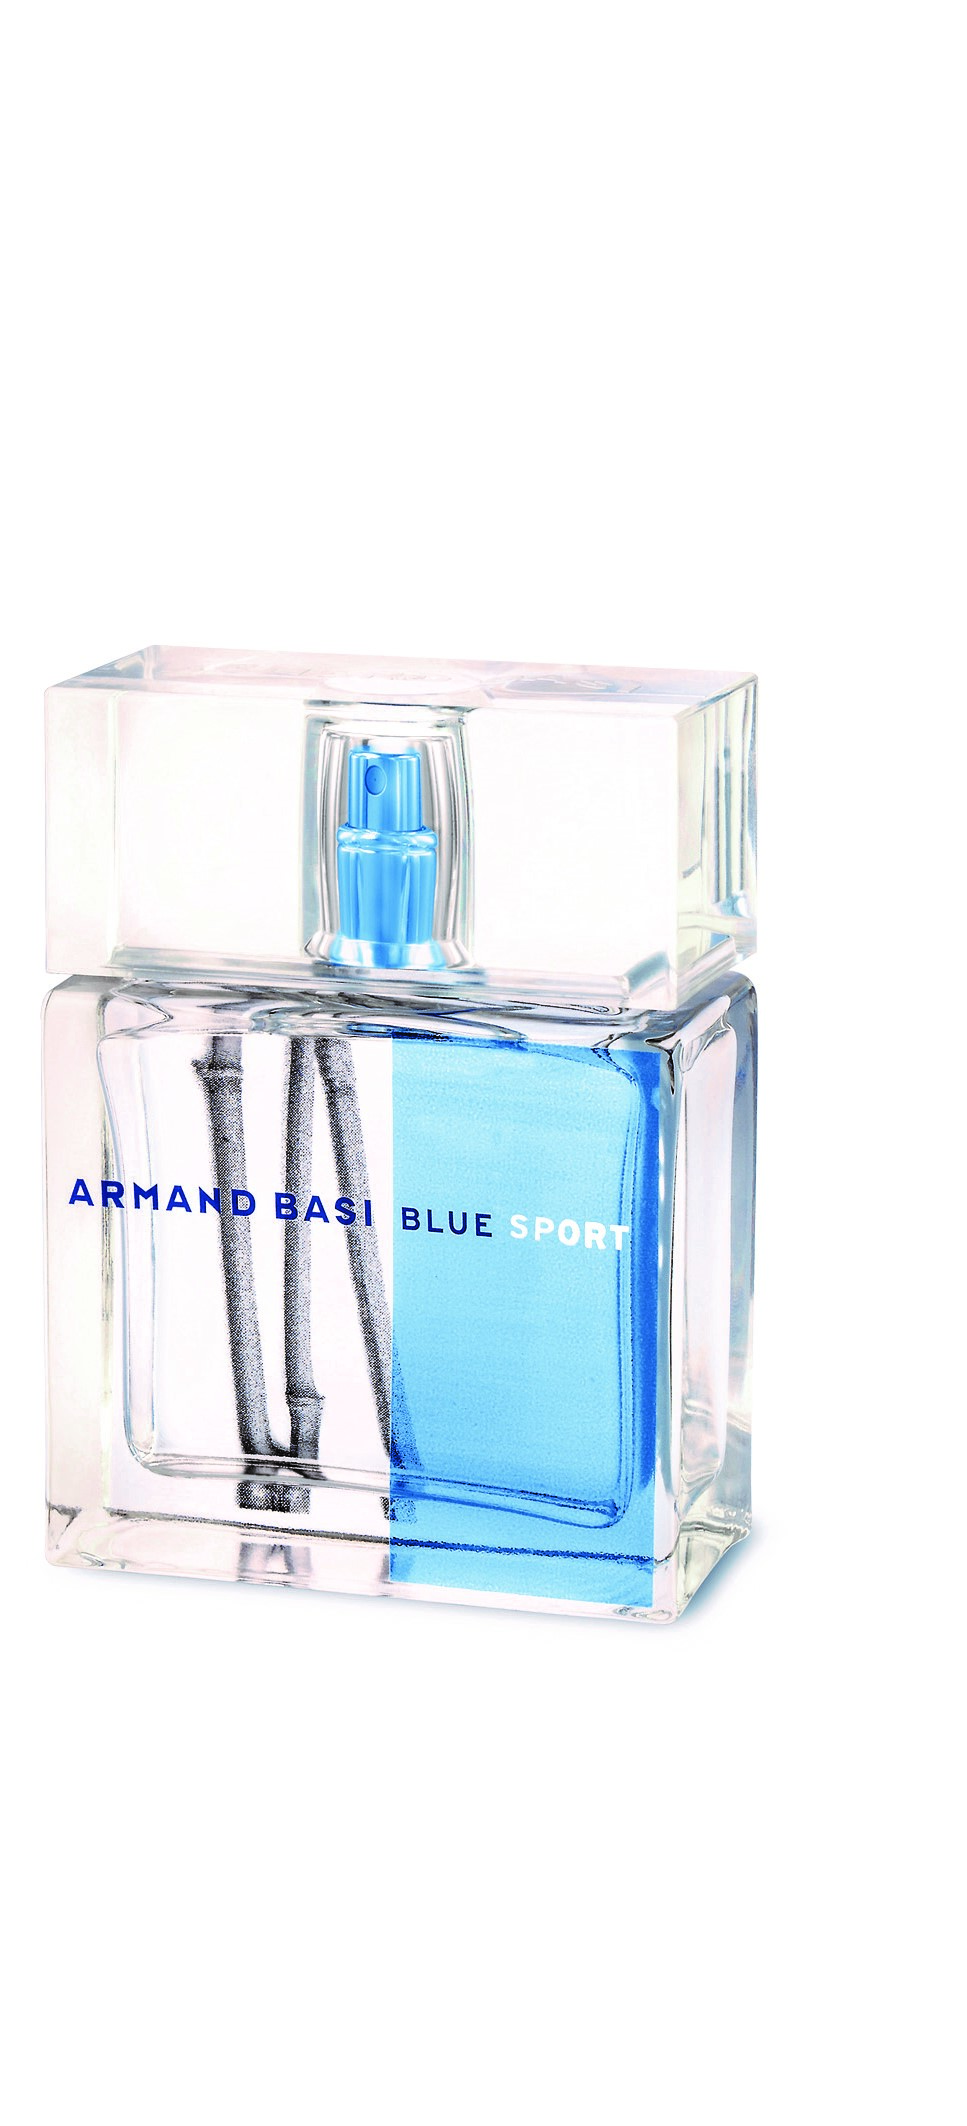 Купить Туалетная вода Armand Basi, Armand Basi In Blue Sport 50ml тестер, Испания